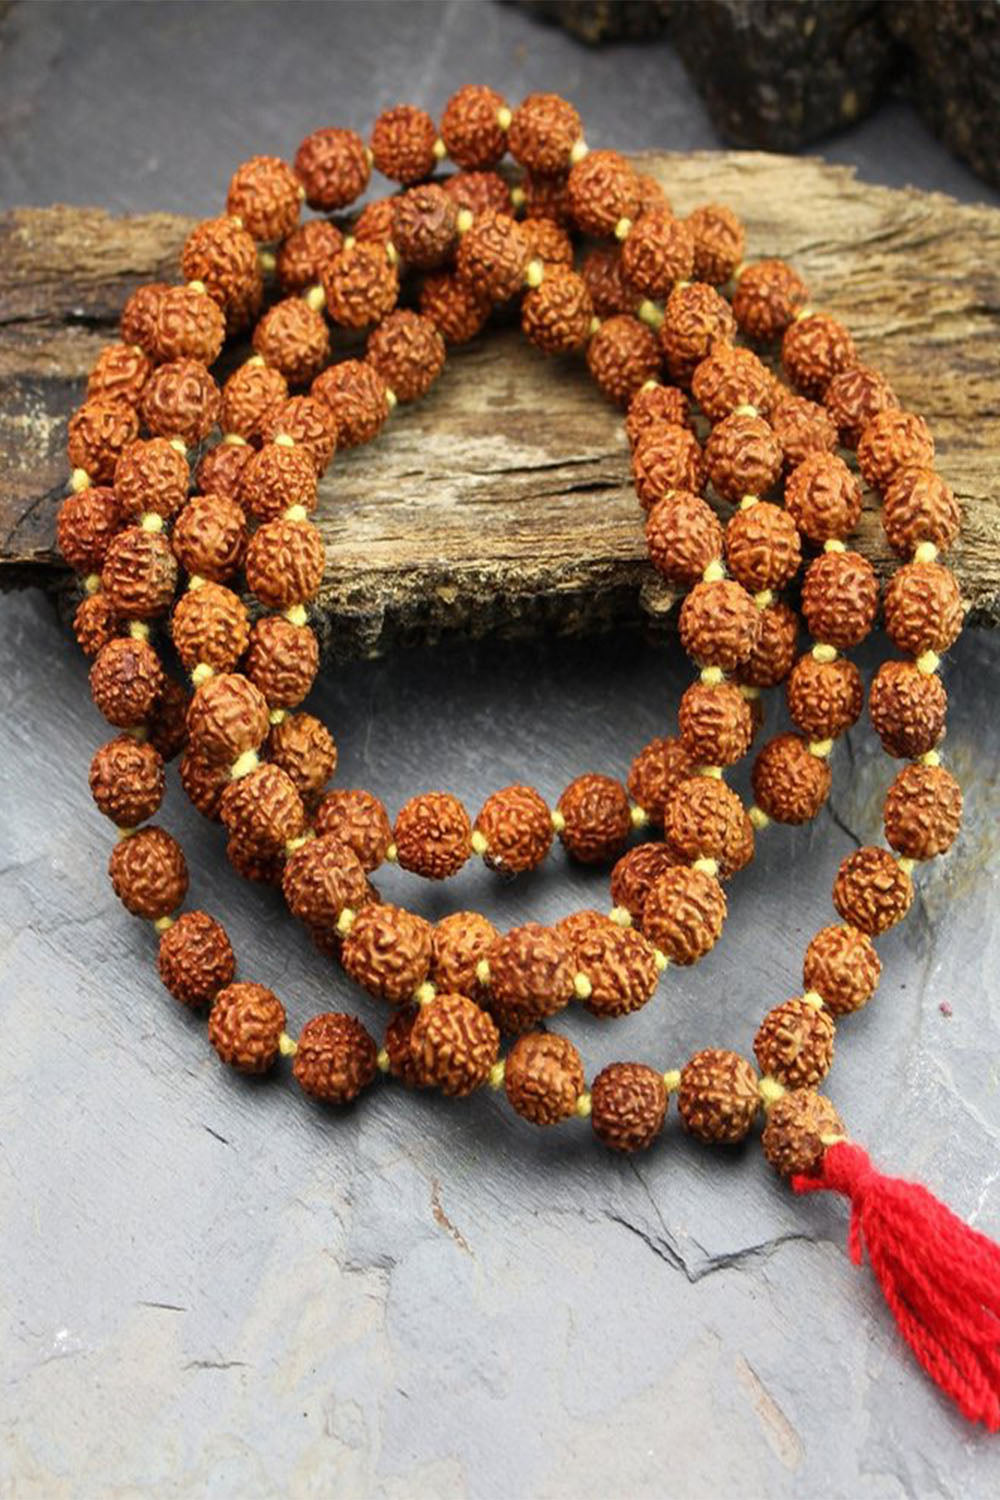 Sivalya Rudraksha 108 Beads Knotted Meditation Mala